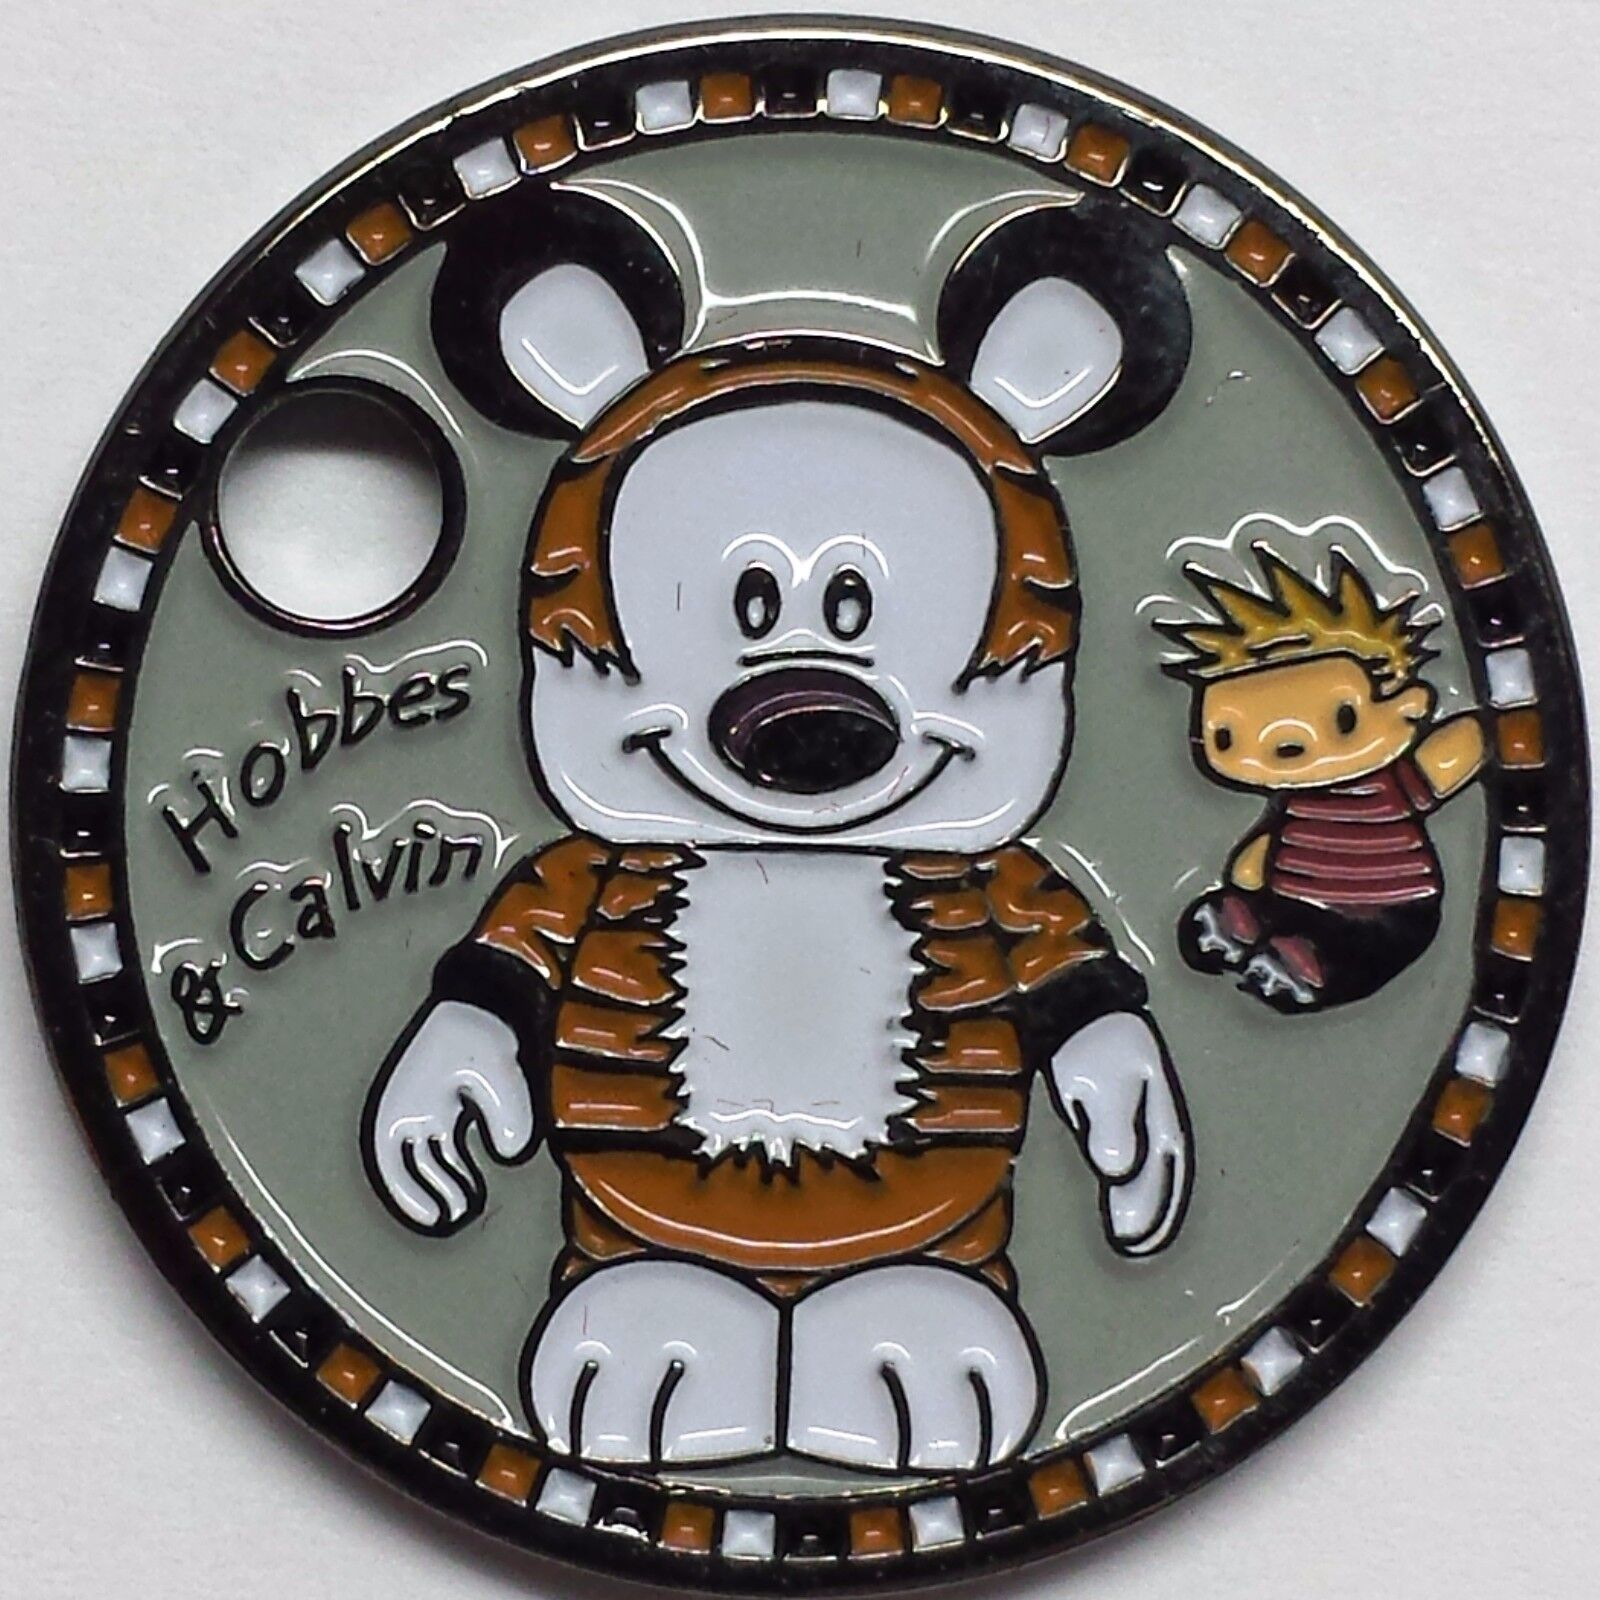 Calvin & Hobbes Vinylmation Disney Bill Watterson Pathtag Coin Geocoin Geocache